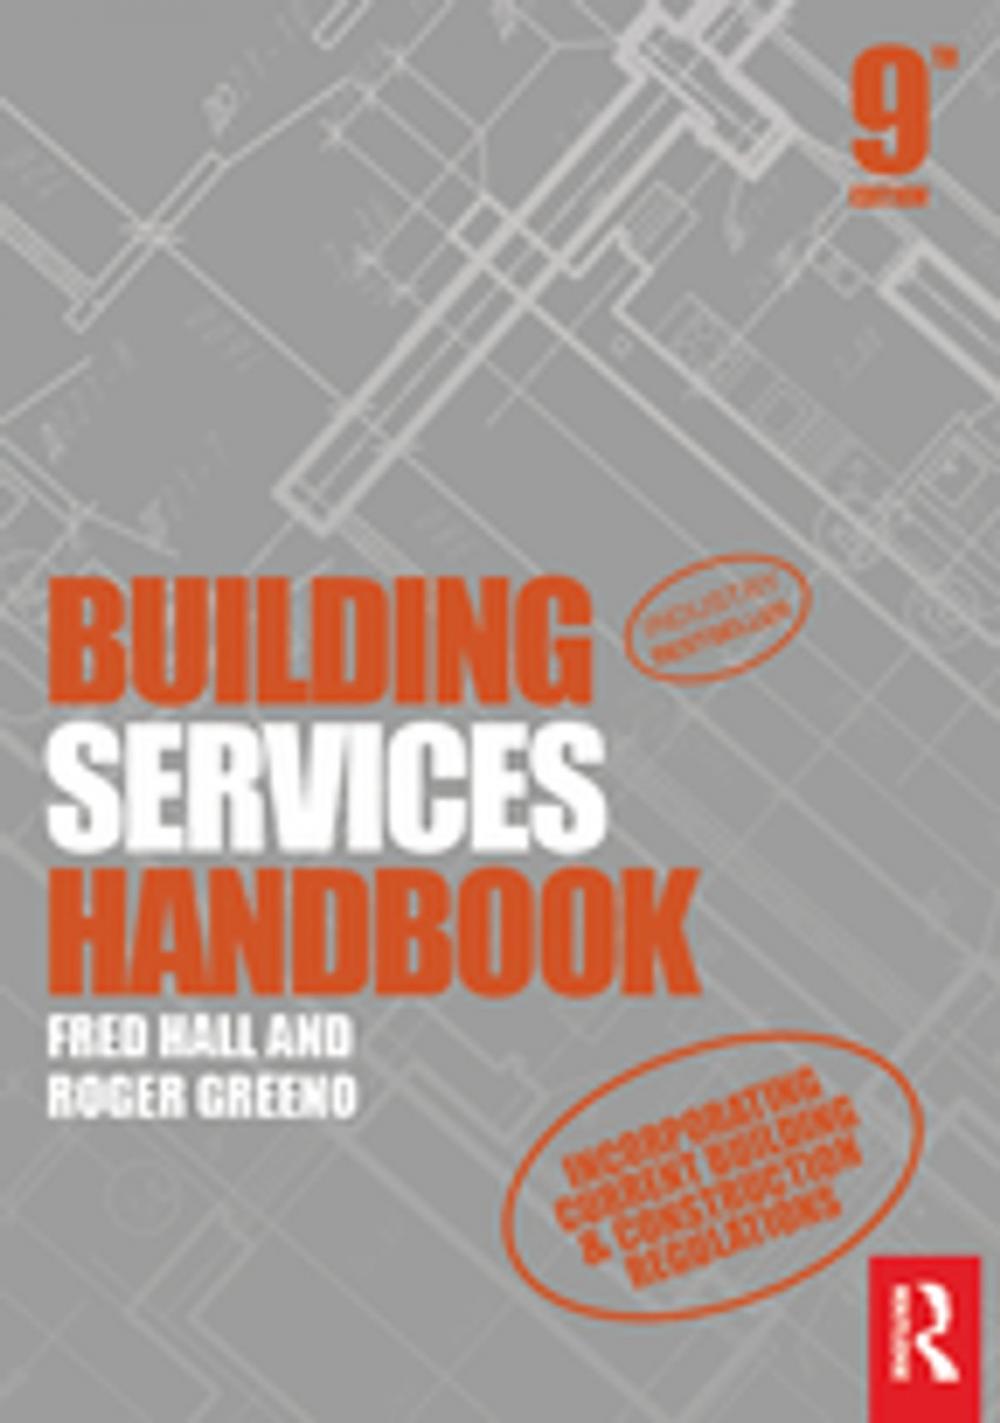 Big bigCover of Building Services Handbook